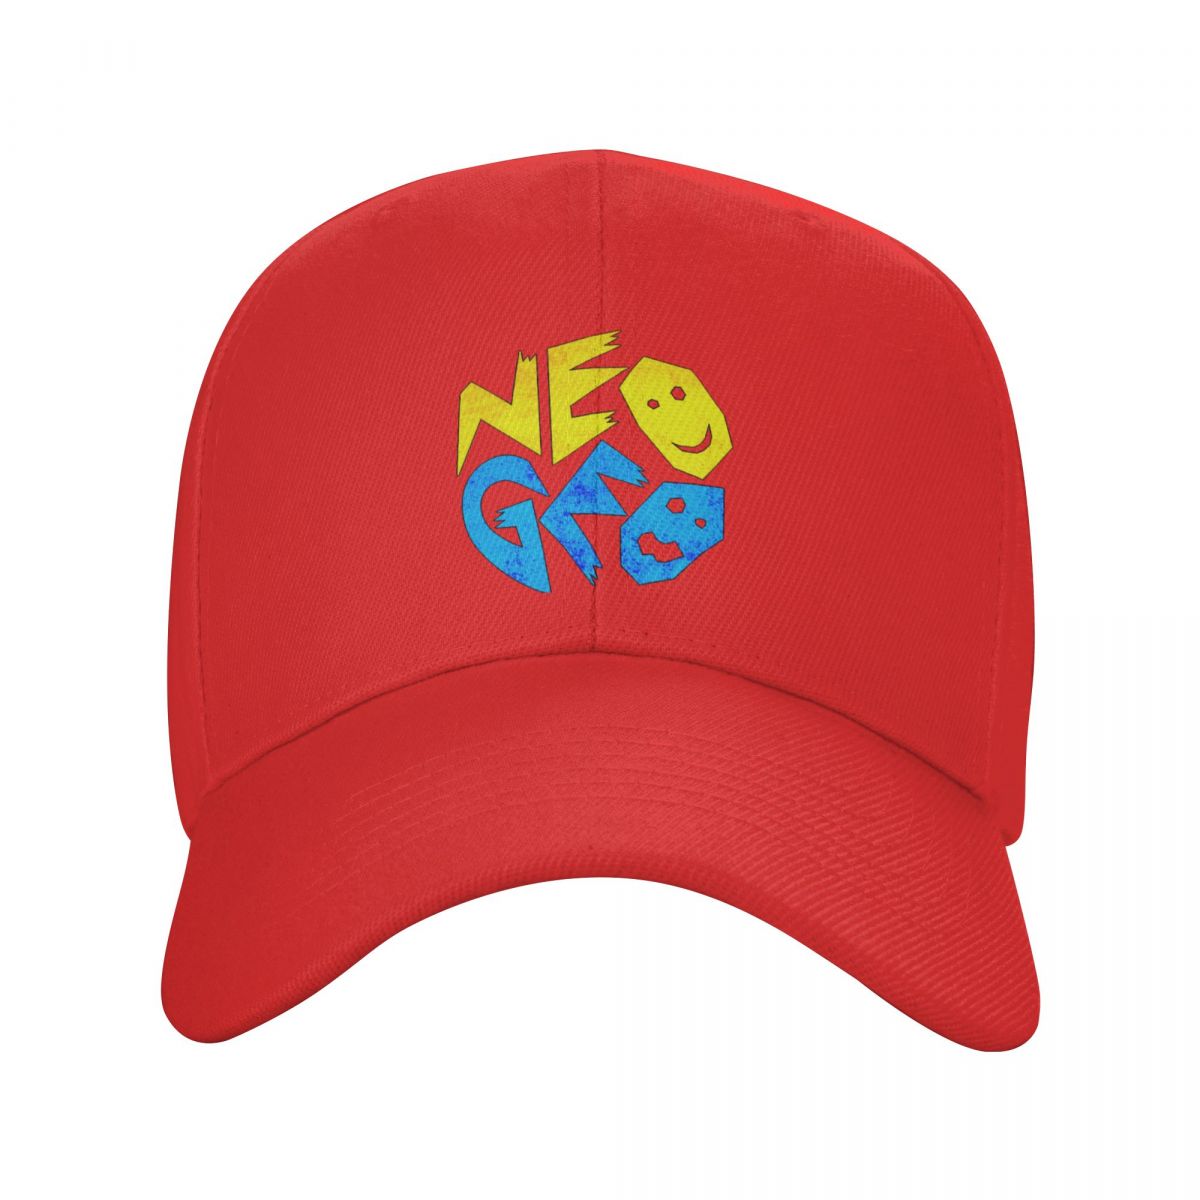 Neo Geo Arcade Game - Retro Gamer - Snapback Baseball Cap - Summer Hat For Men and Women-Red-Adjustable Cap-